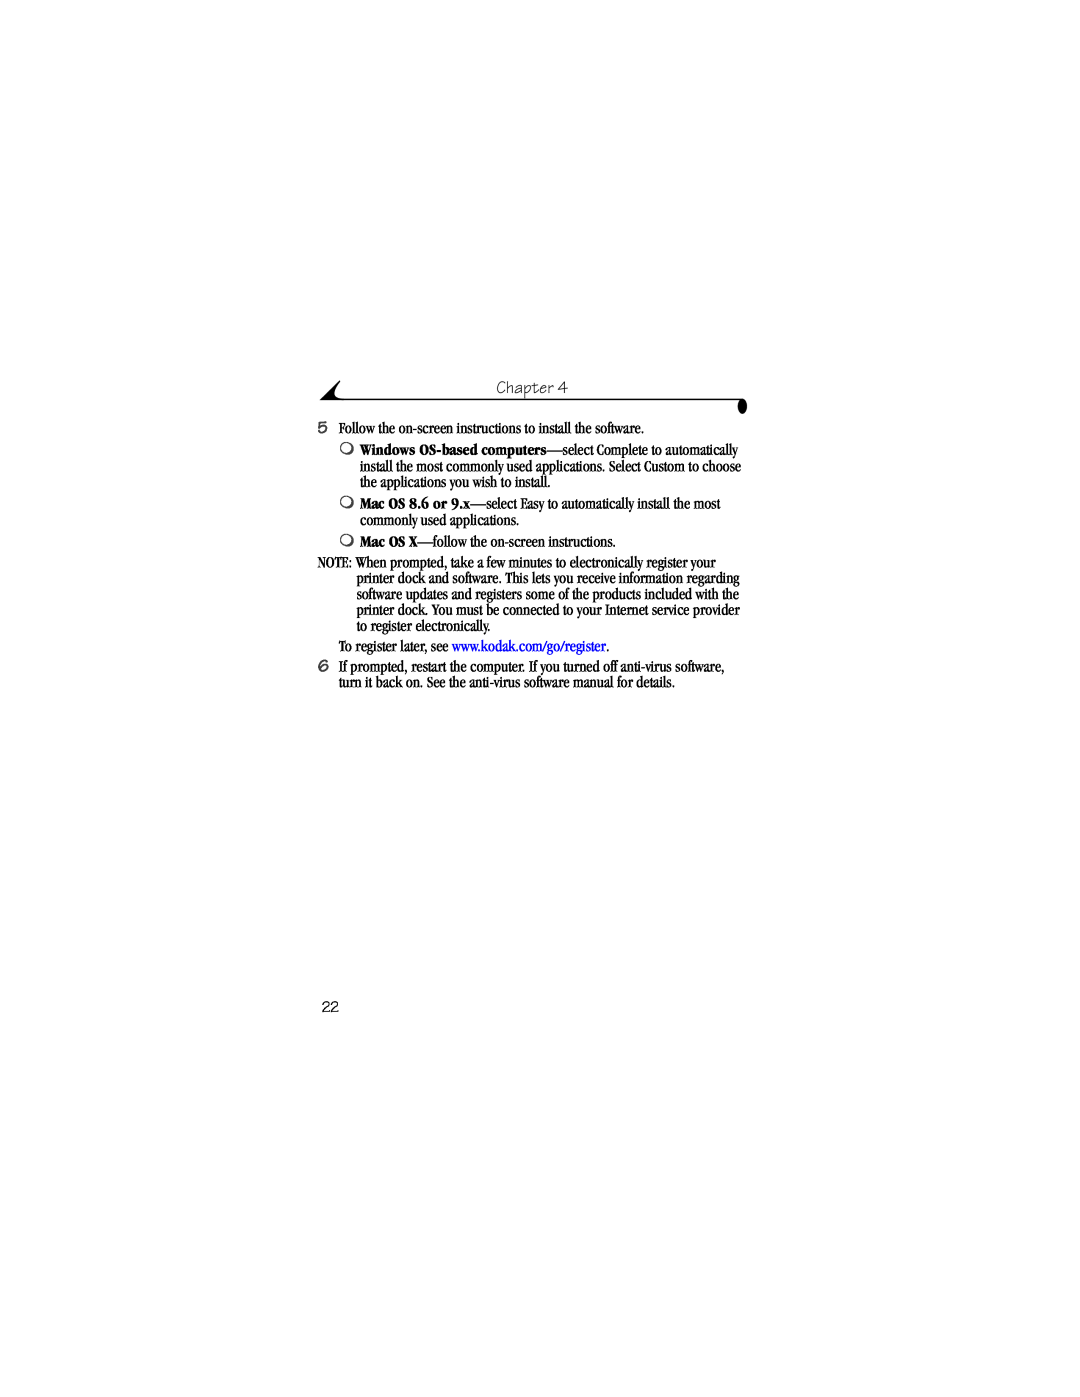 Kodak 4000 manual Chapter, Mac OS X-followthe on-screeninstructions 